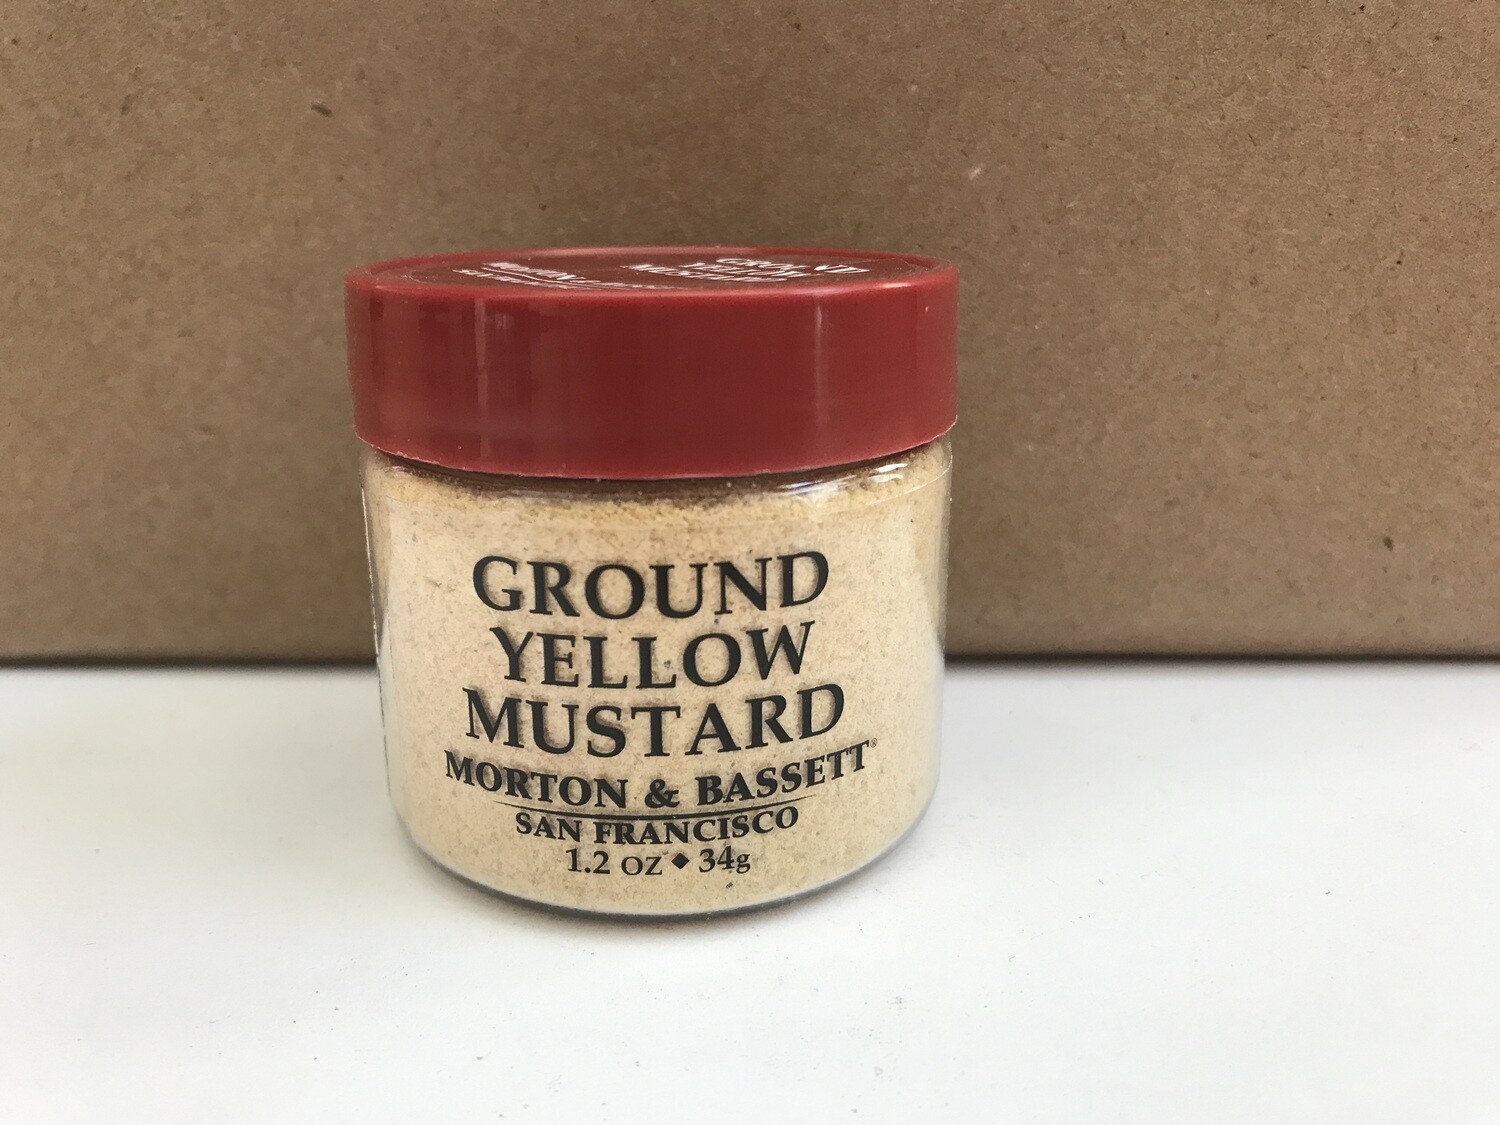 Grocery / Spice / Morton & Bassett Mustard Yellow Ground, 1.2 oz